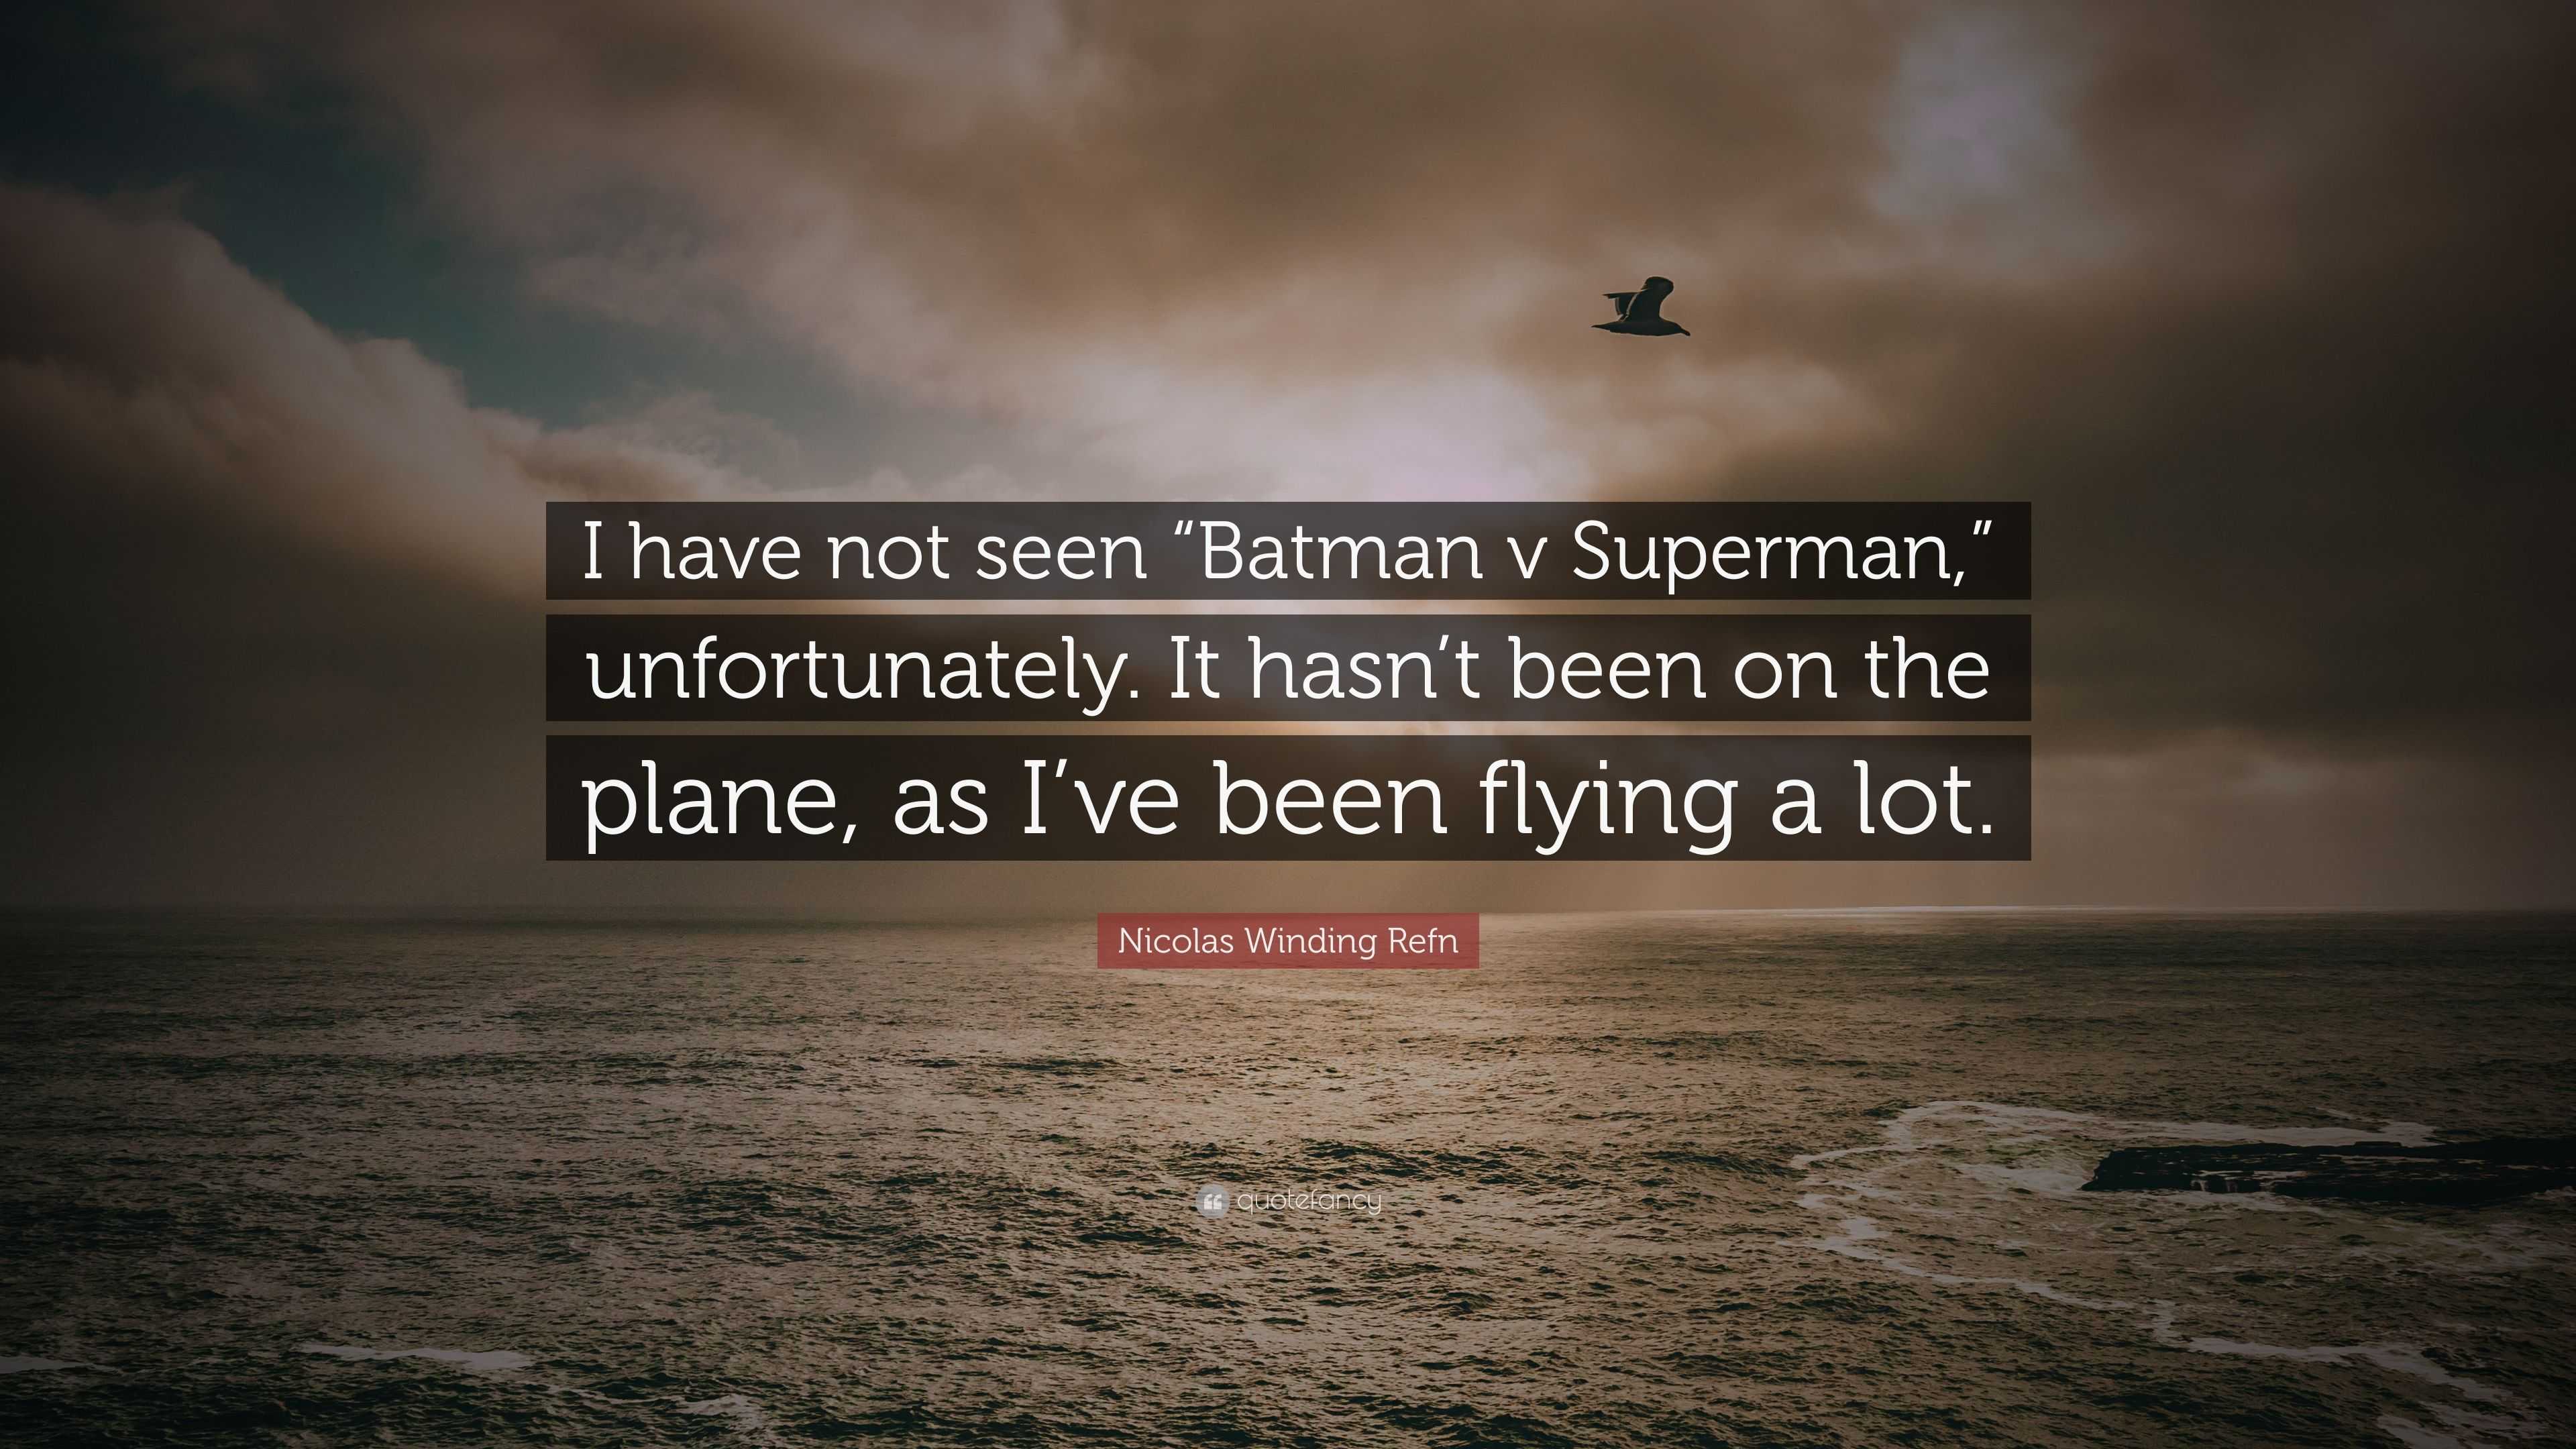 Nicolas Winding Refn Quote: “I have not seen “Batman v Superman,”  unfortunately. It hasn't been